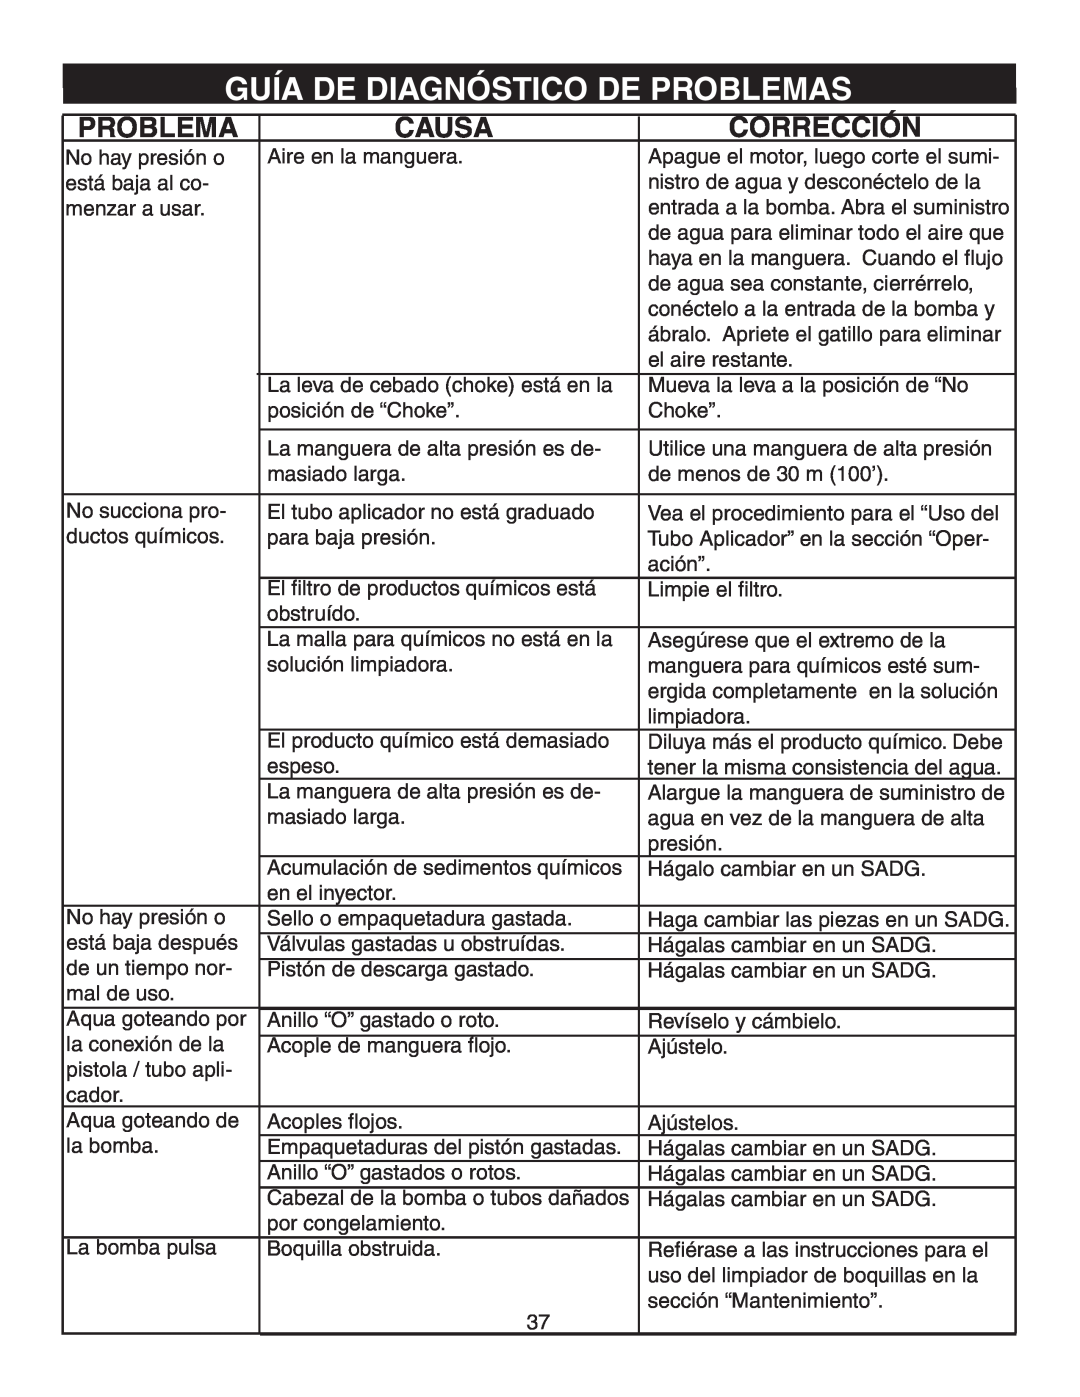 Simpson V3100 warranty Guía De Diagnóstico De Problemas, Causa, Corrección 